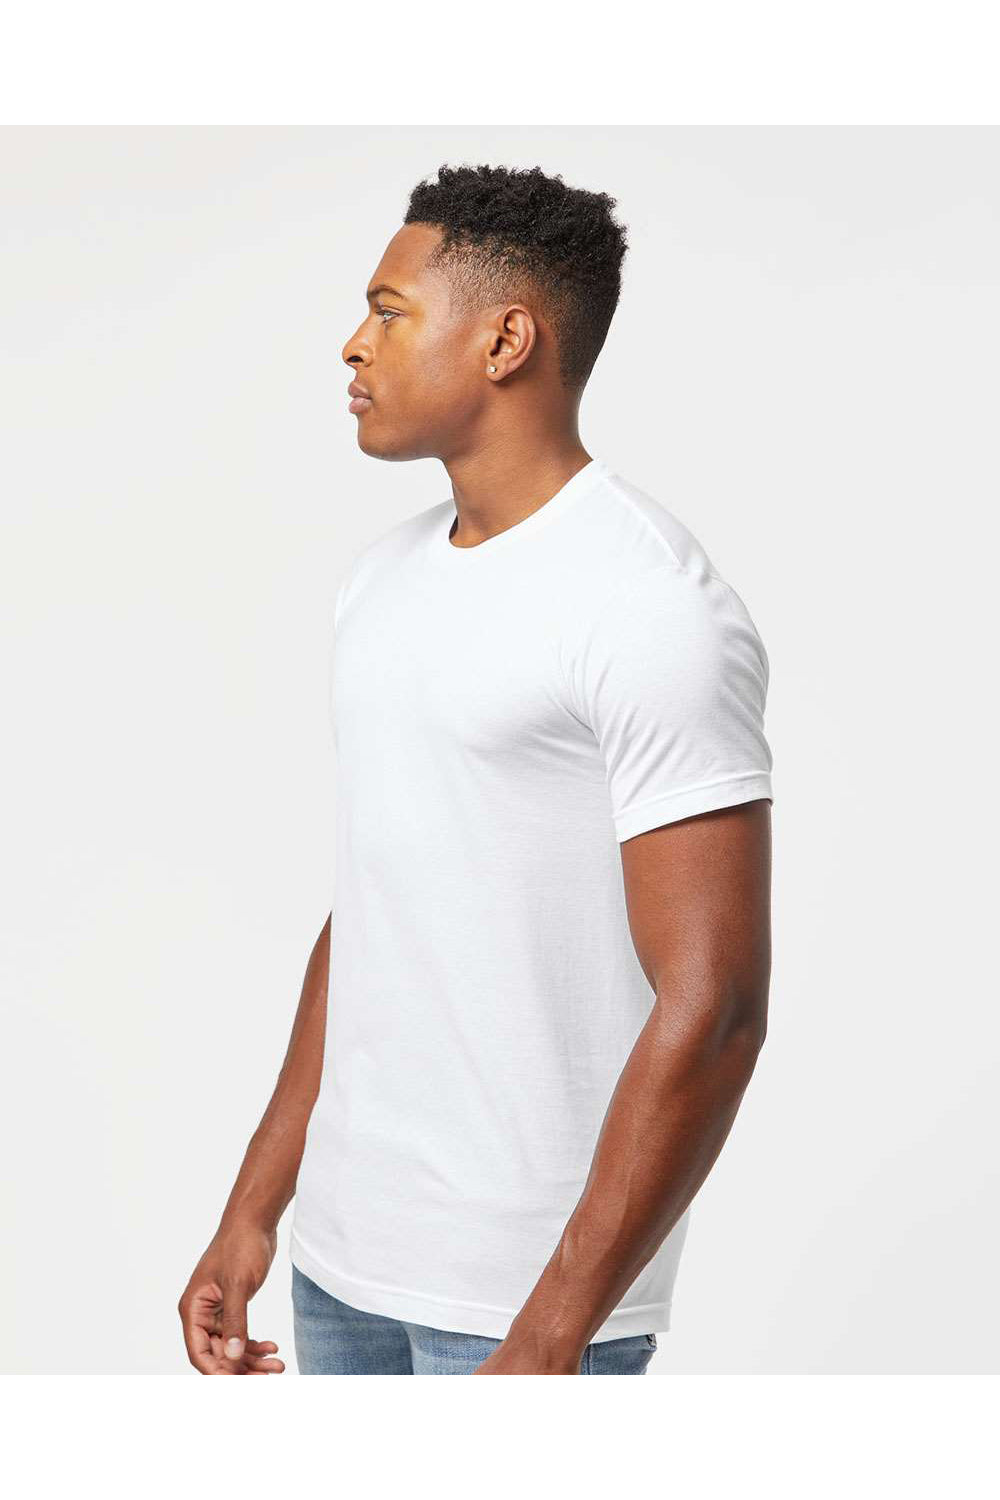 Tultex 202 Mens Fine Jersey Short Sleeve Crewneck T-Shirt White Model Side